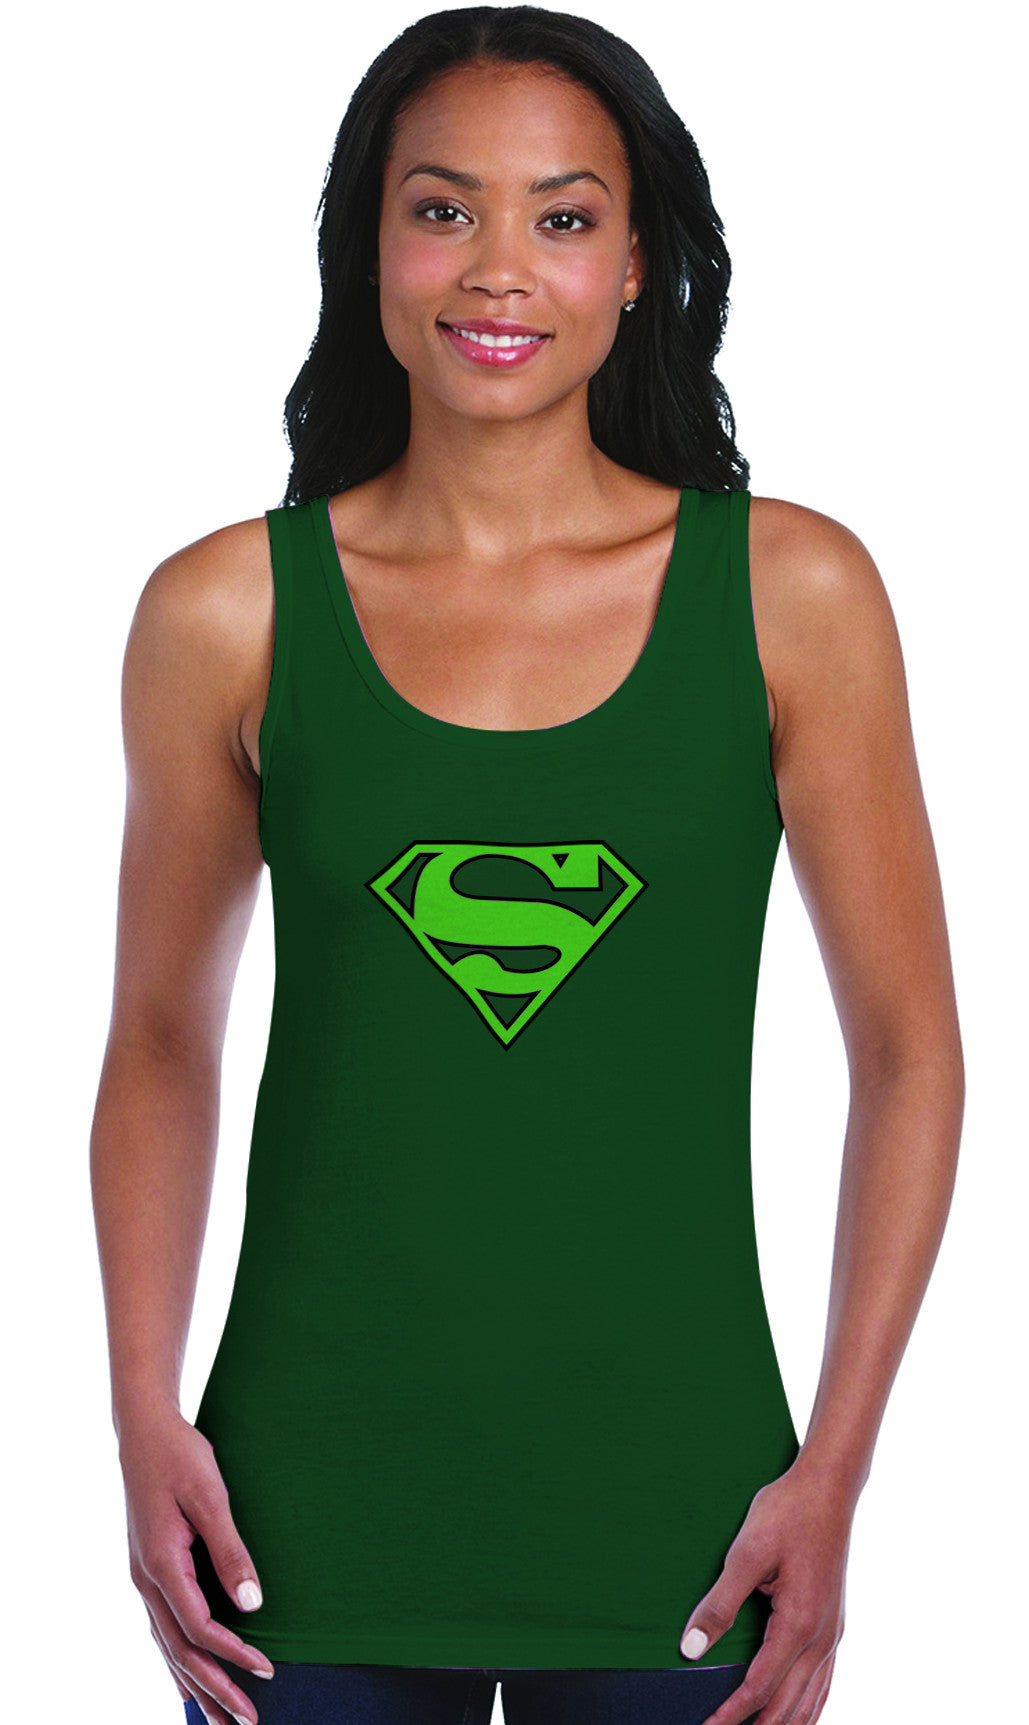 Superman Green Logo on Dark Green Fitted Sheer Tank top for Women - TshirtNow.net - 1